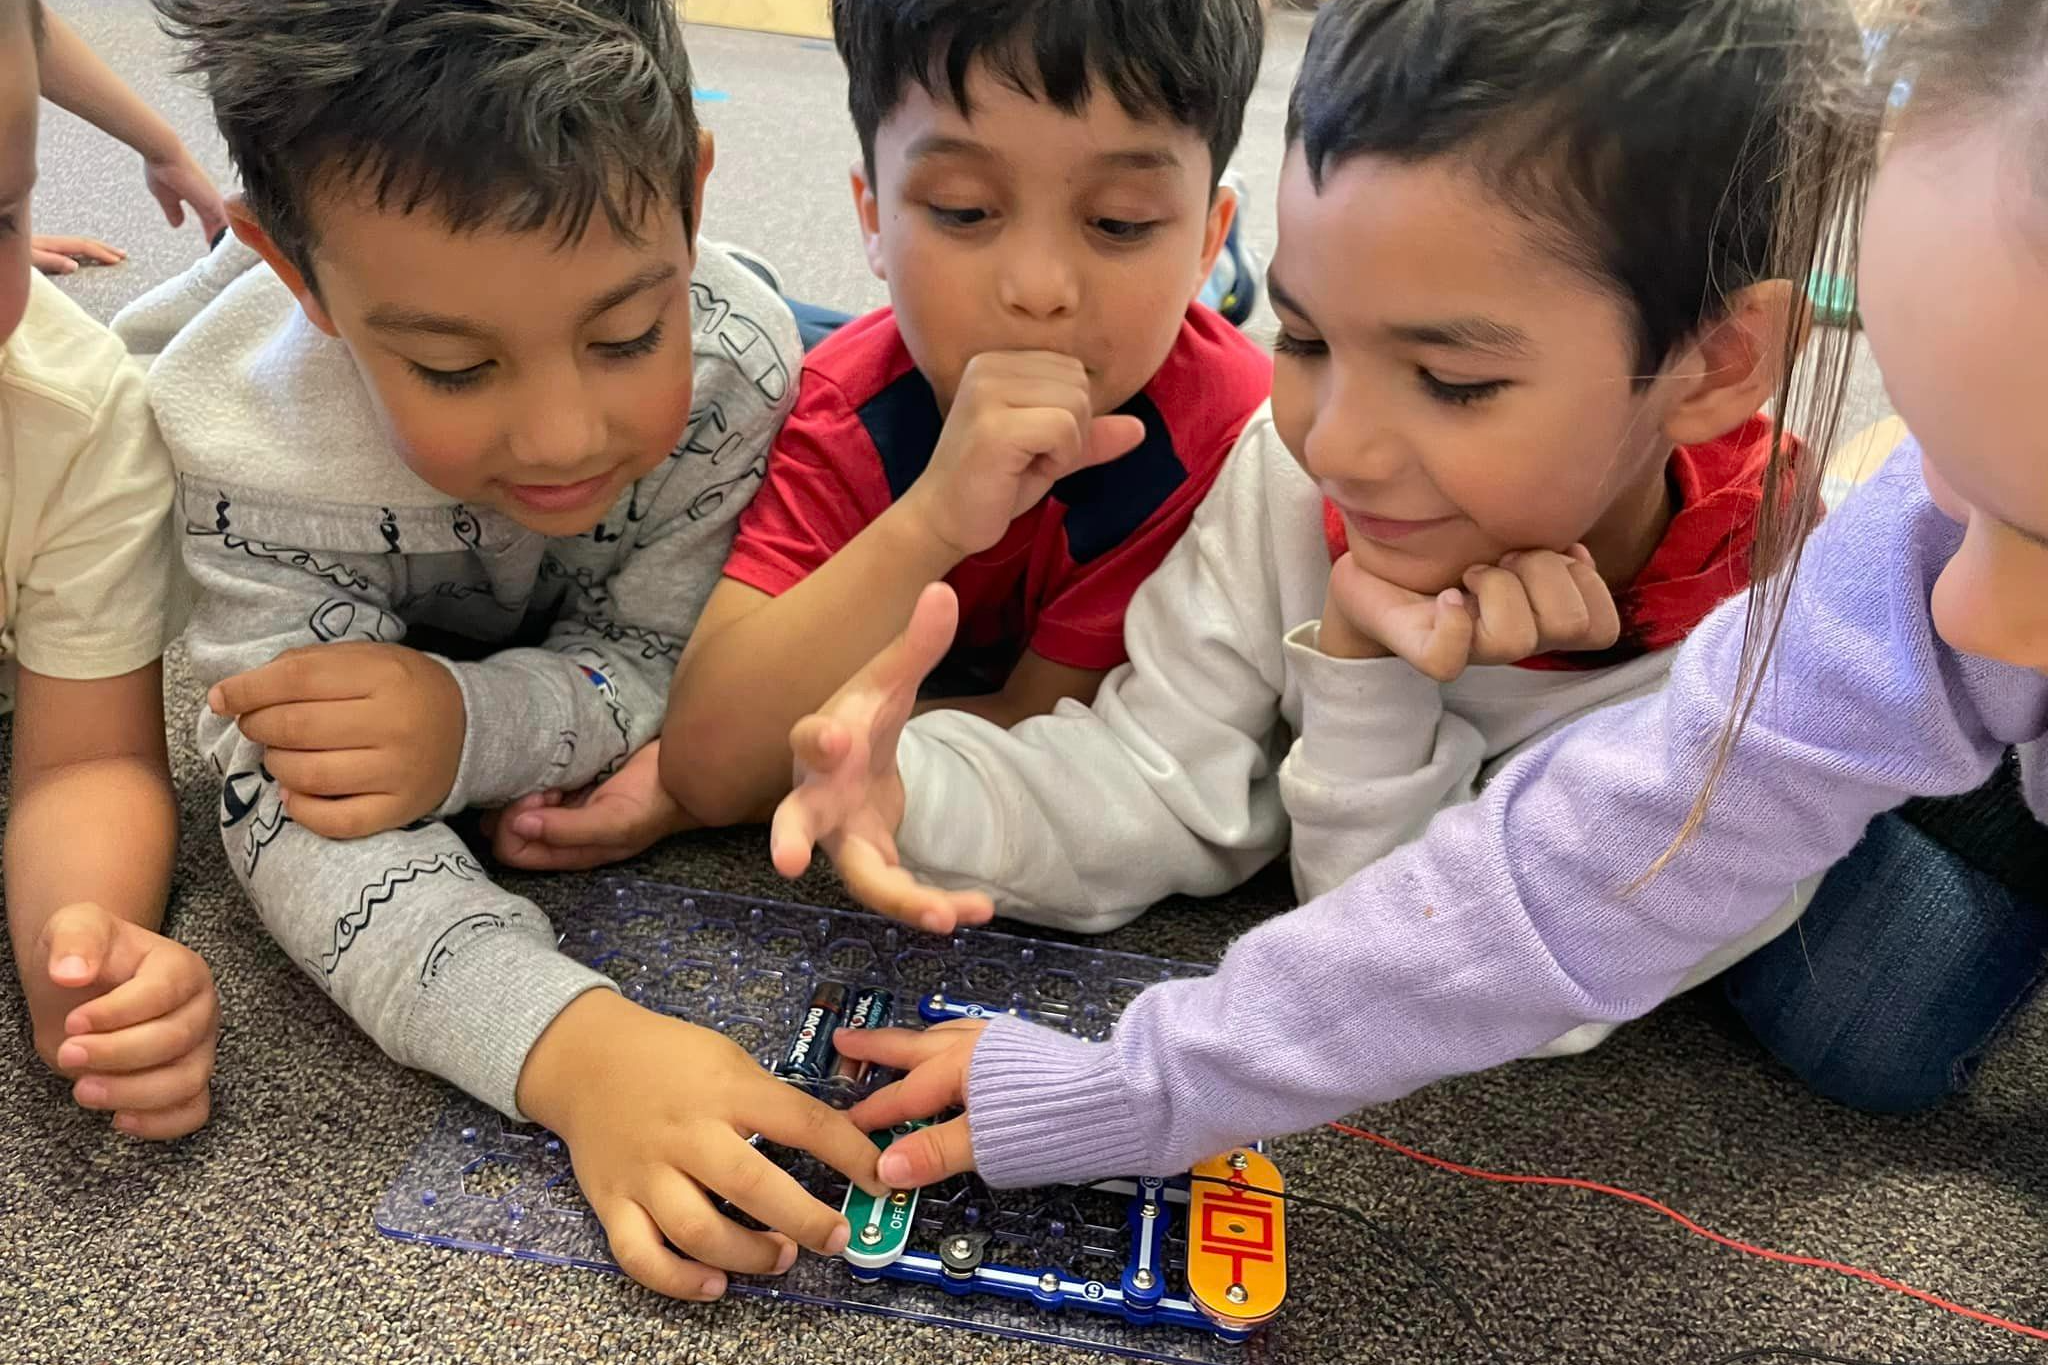 Children programing robots